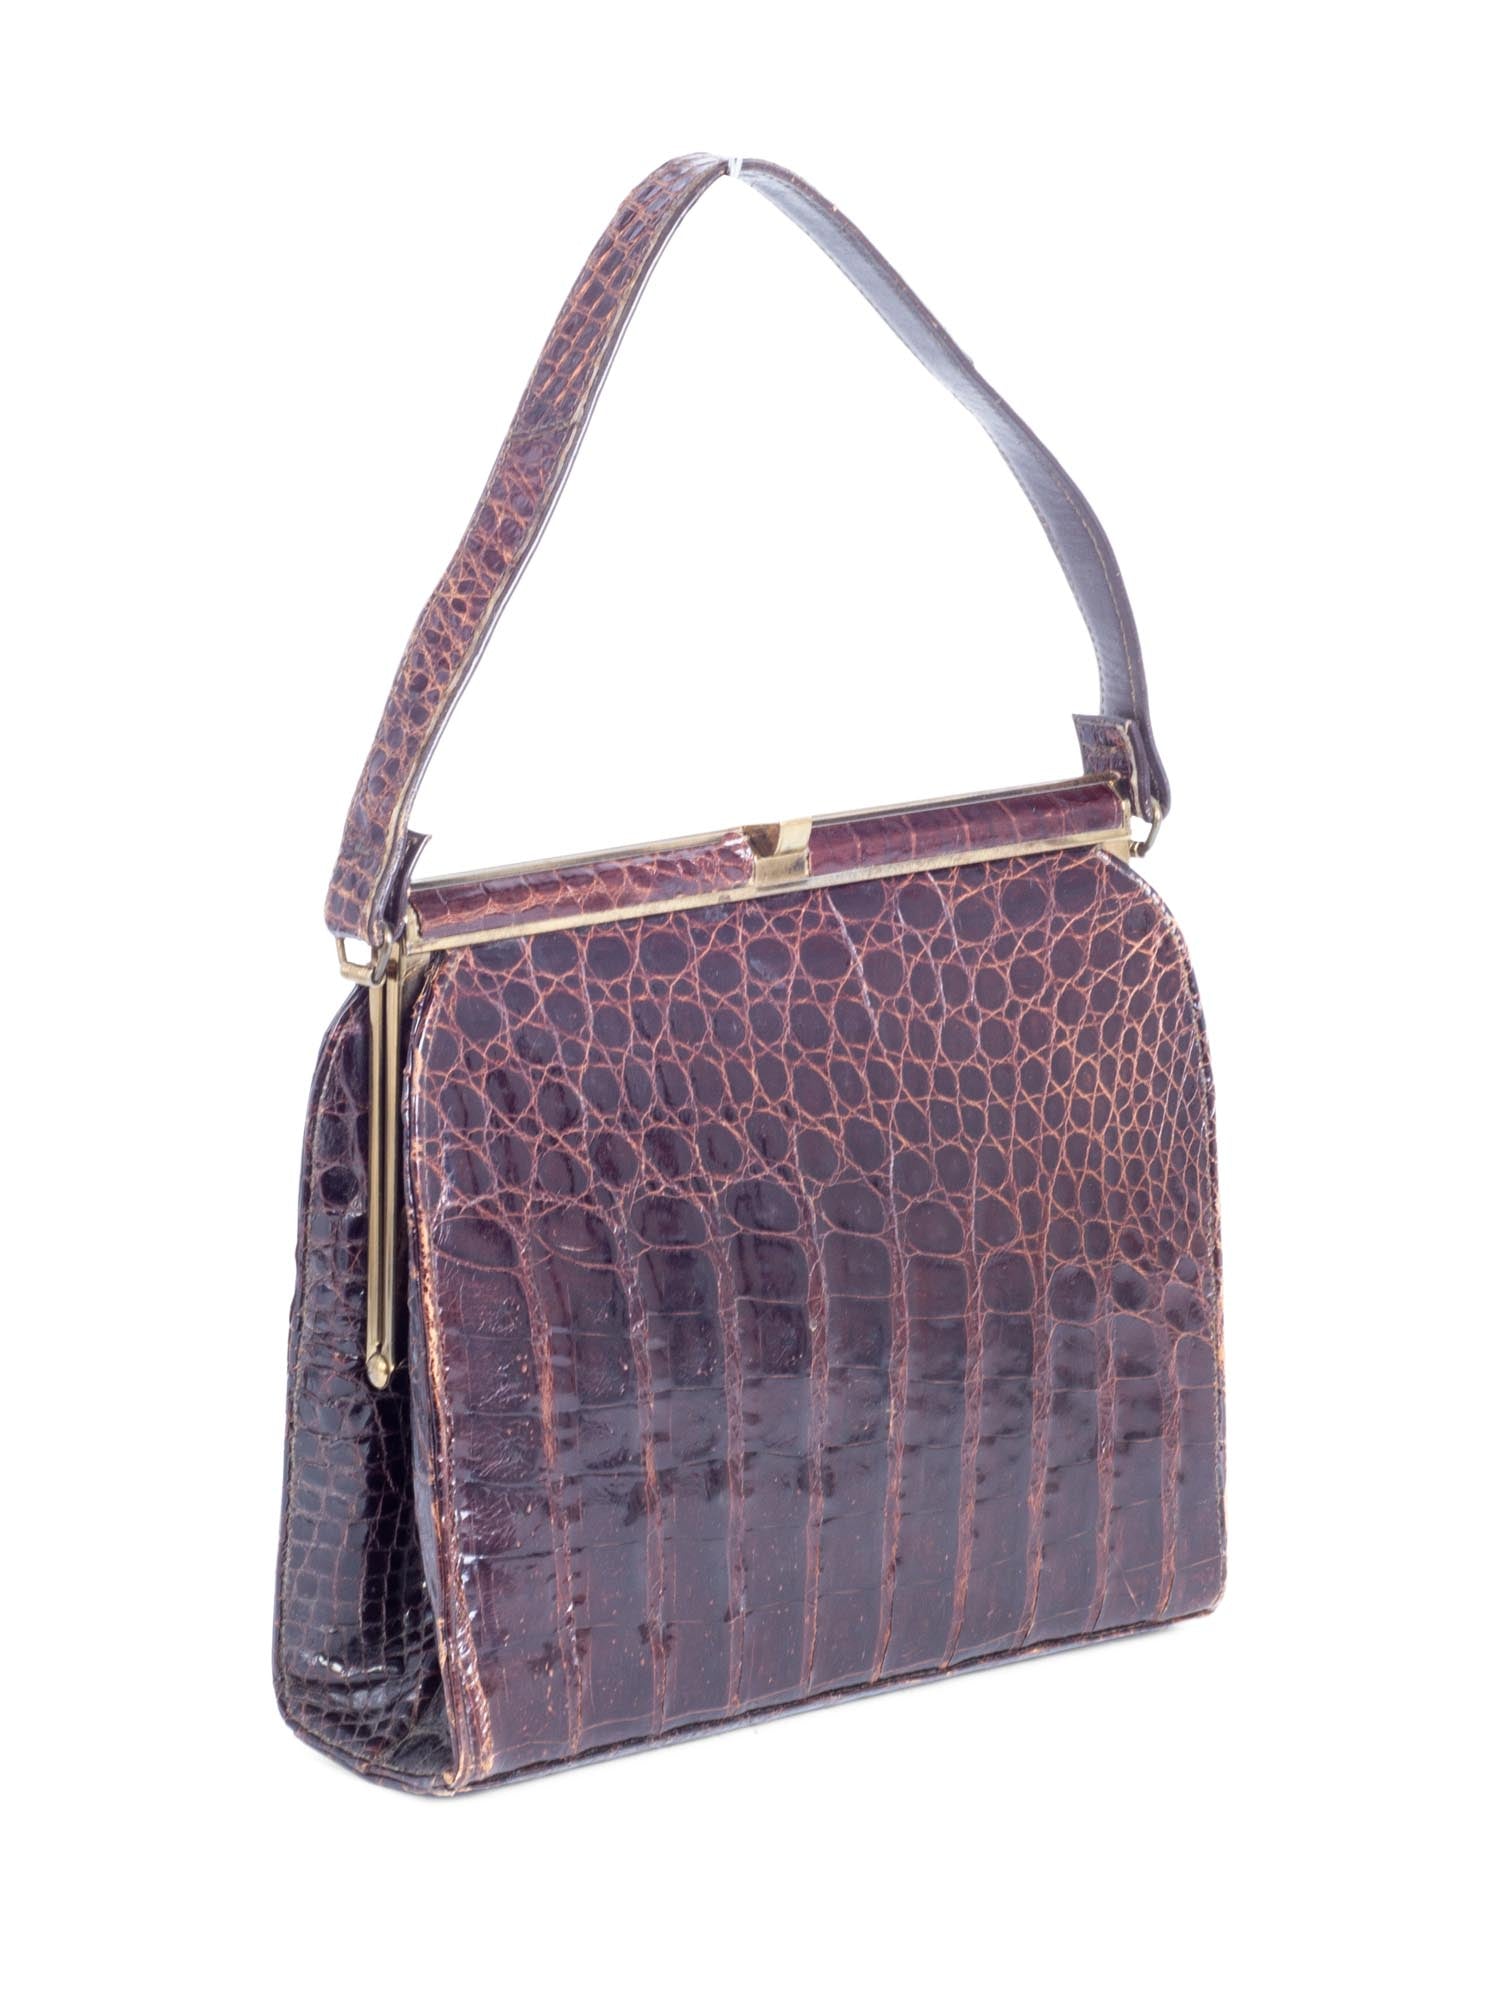 Vintage Crocodile Leather Top Handle Satchel Bag Brown Gold